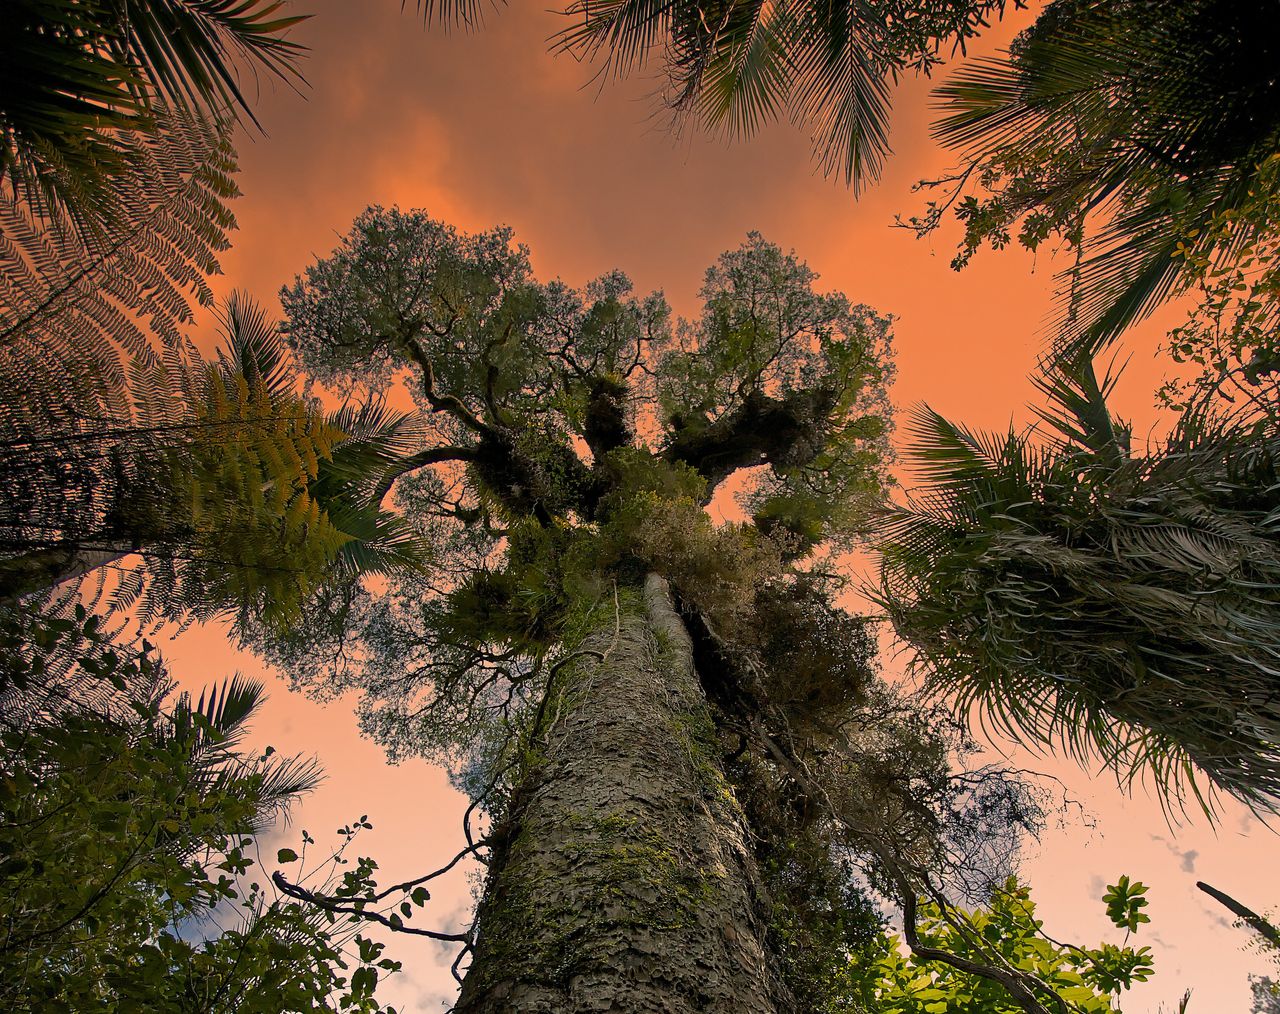 A Giant Kauri tree in Waitakere Ranges Regional Park near Auckland, New Zealand. 